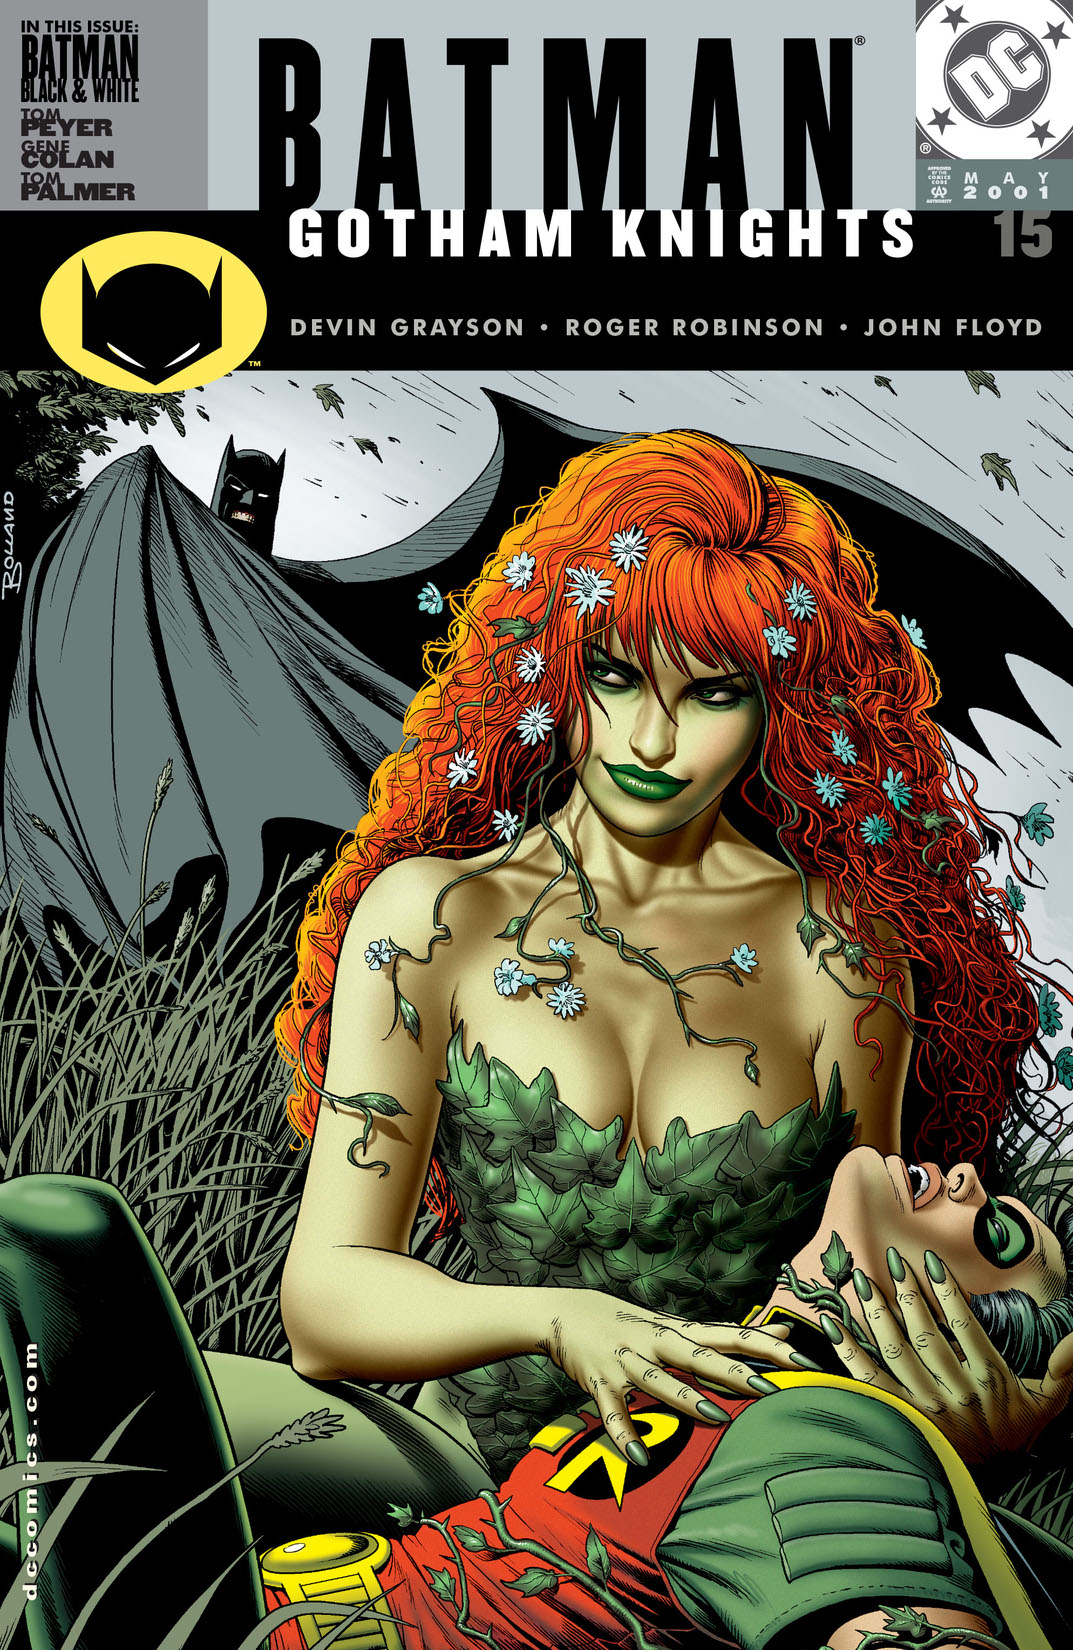 Batman: Gotham Knights #15 preview images